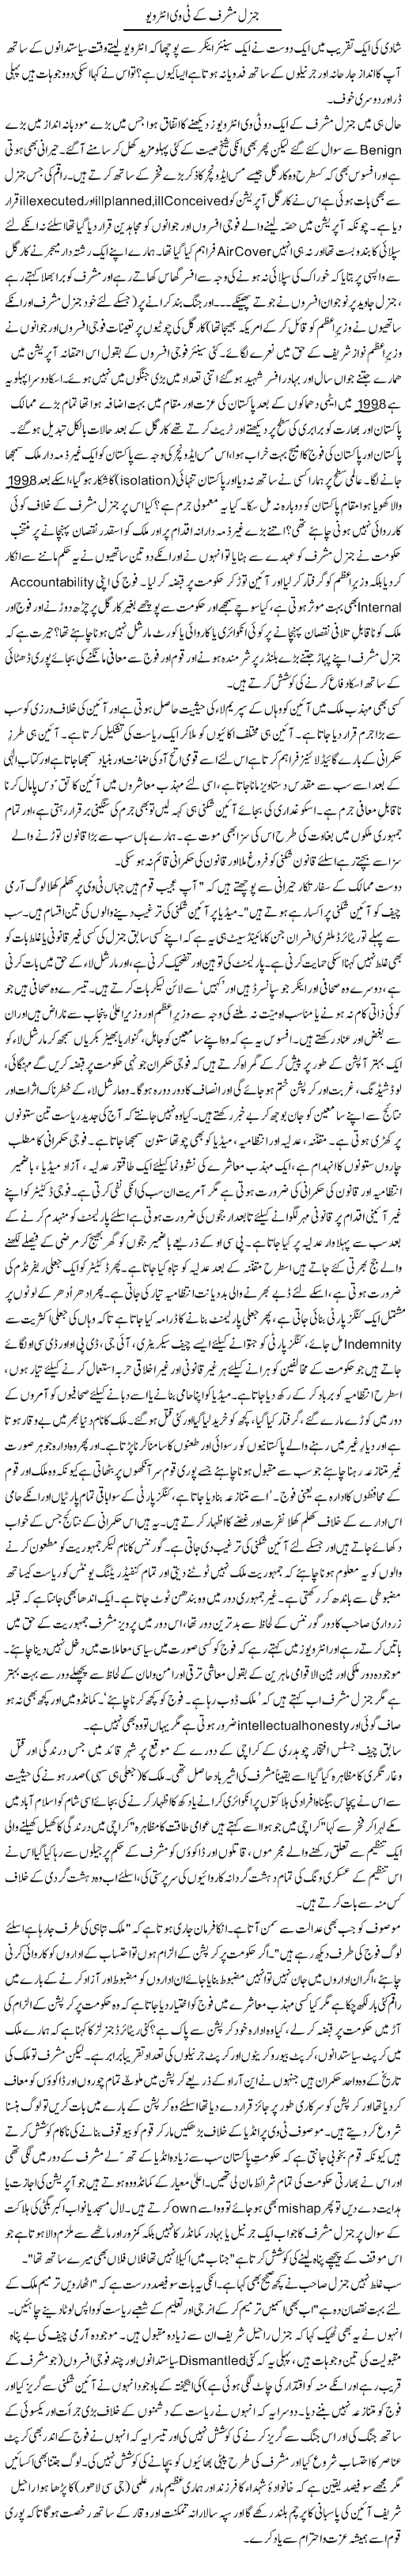 General Musharraf Ke Tv Interview | Zulfiqar Ahmed Cheema | Daily Urdu Columns